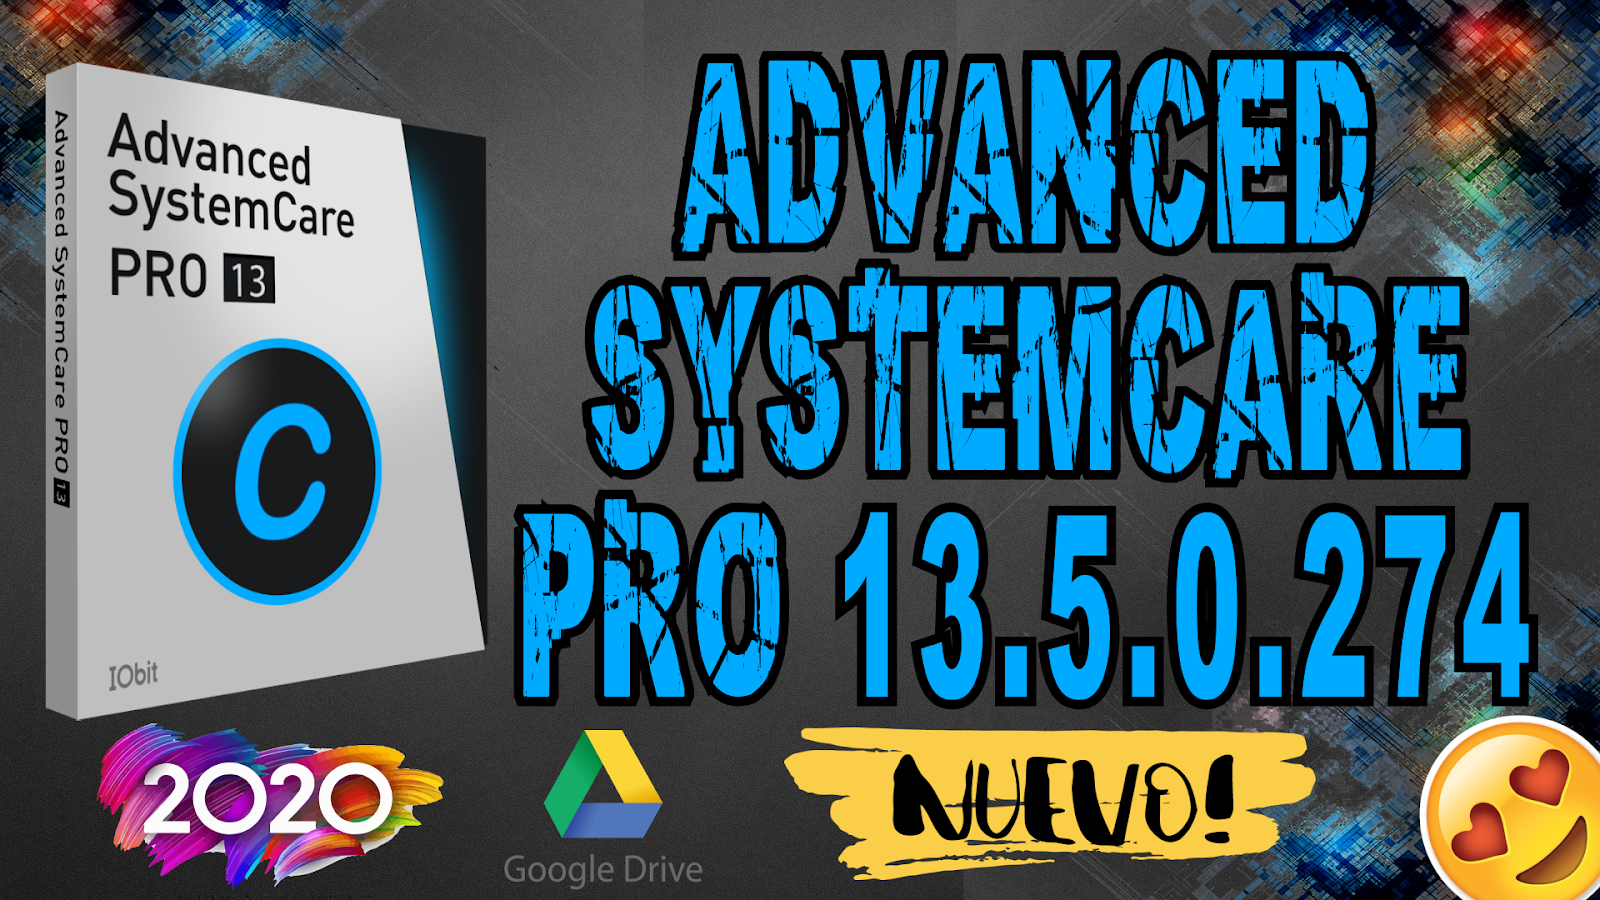 iobit advanced systemcare 13